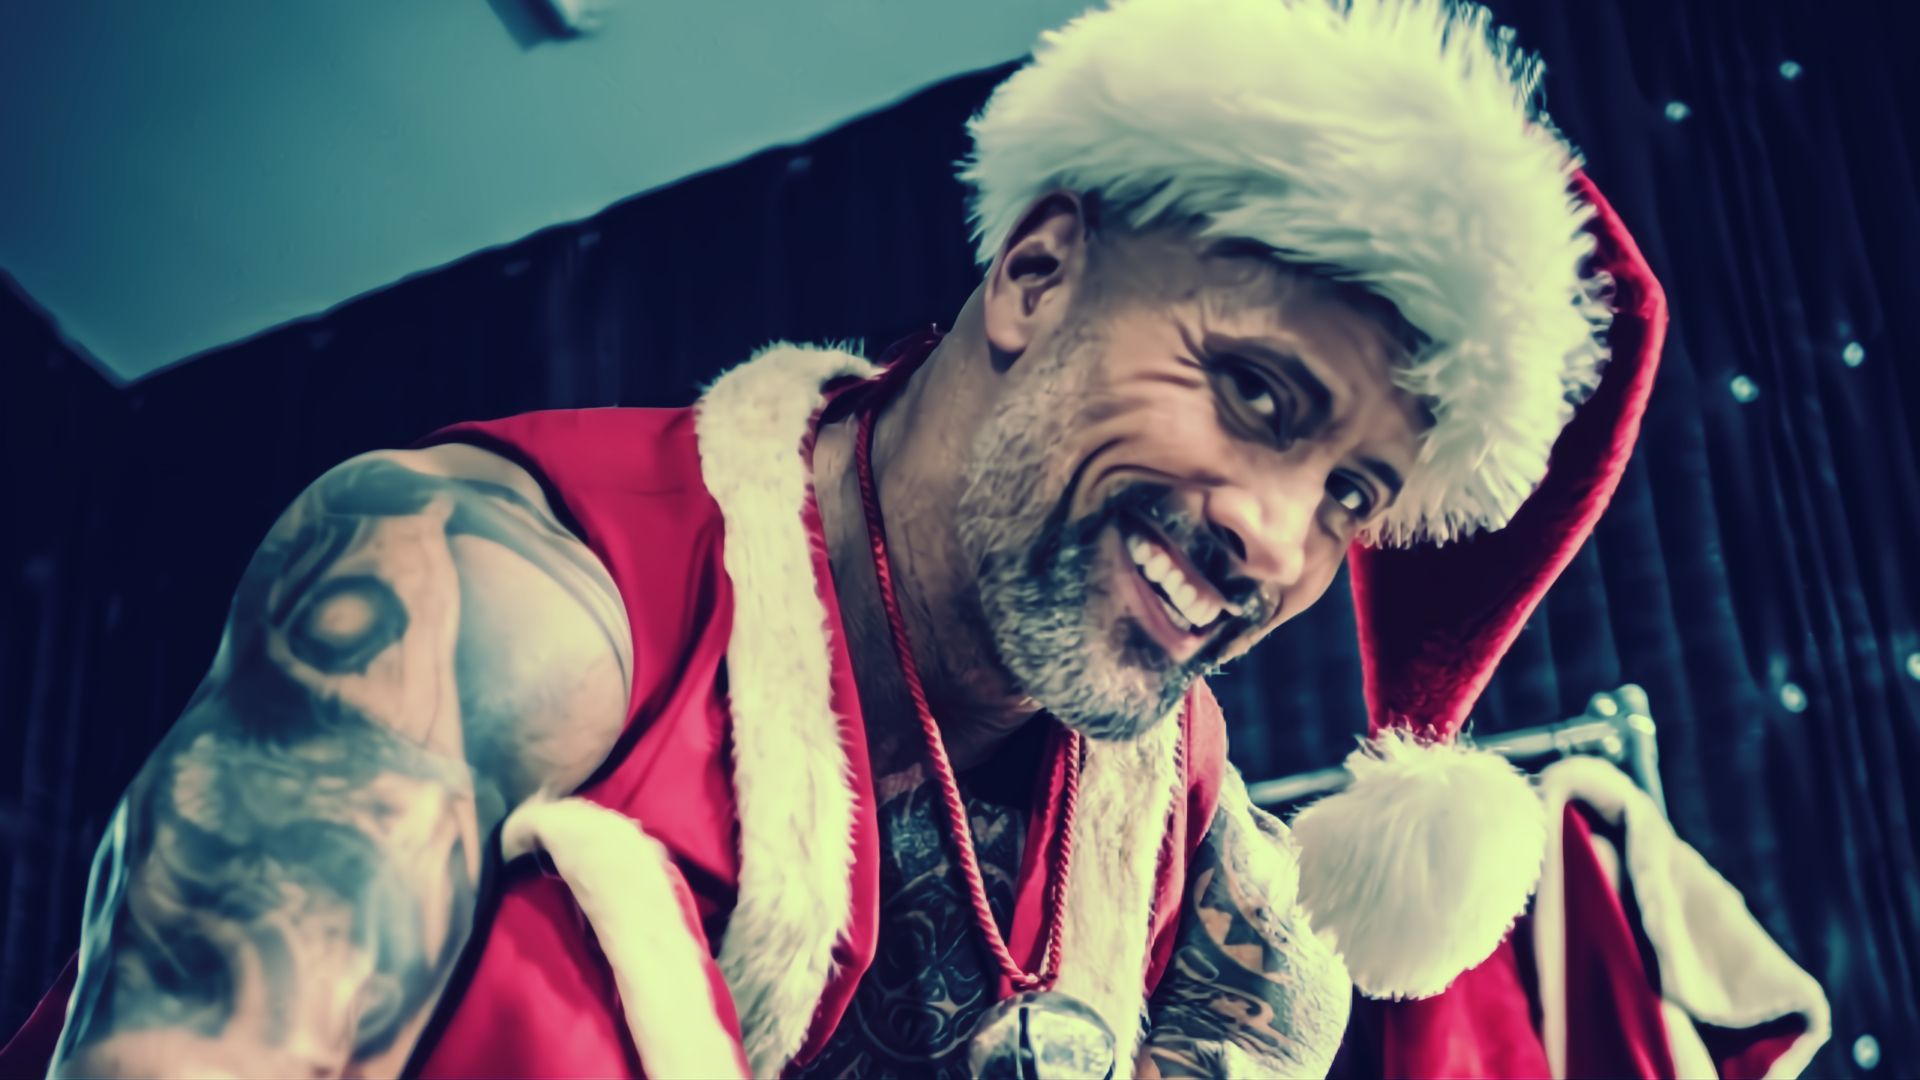 Photo of Dwayne Johnson as Santa Claus provided by Hiram Garcia